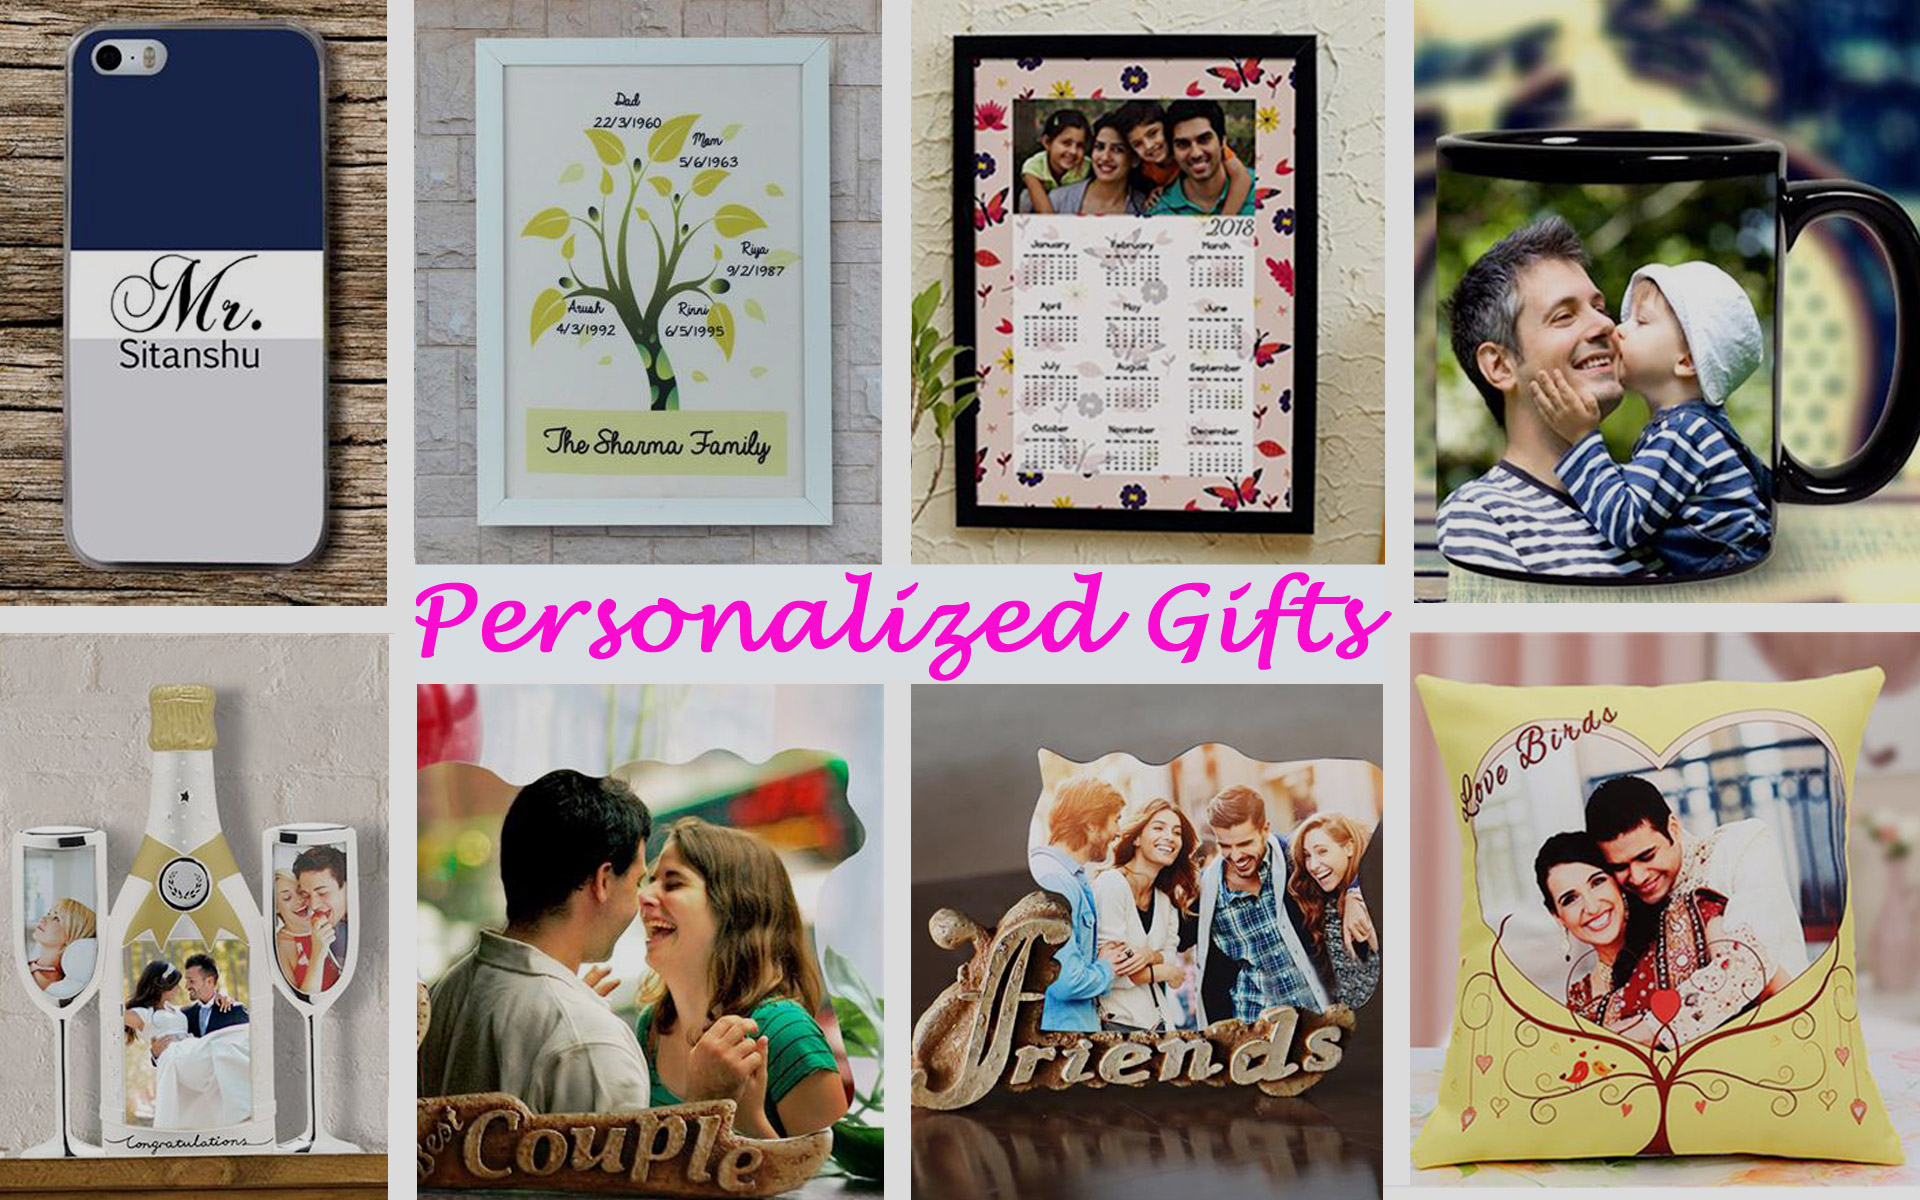 https://www.giftalove.com/blog/wp-content/uploads/2018/04/Personalized-Gifts-img.jpg